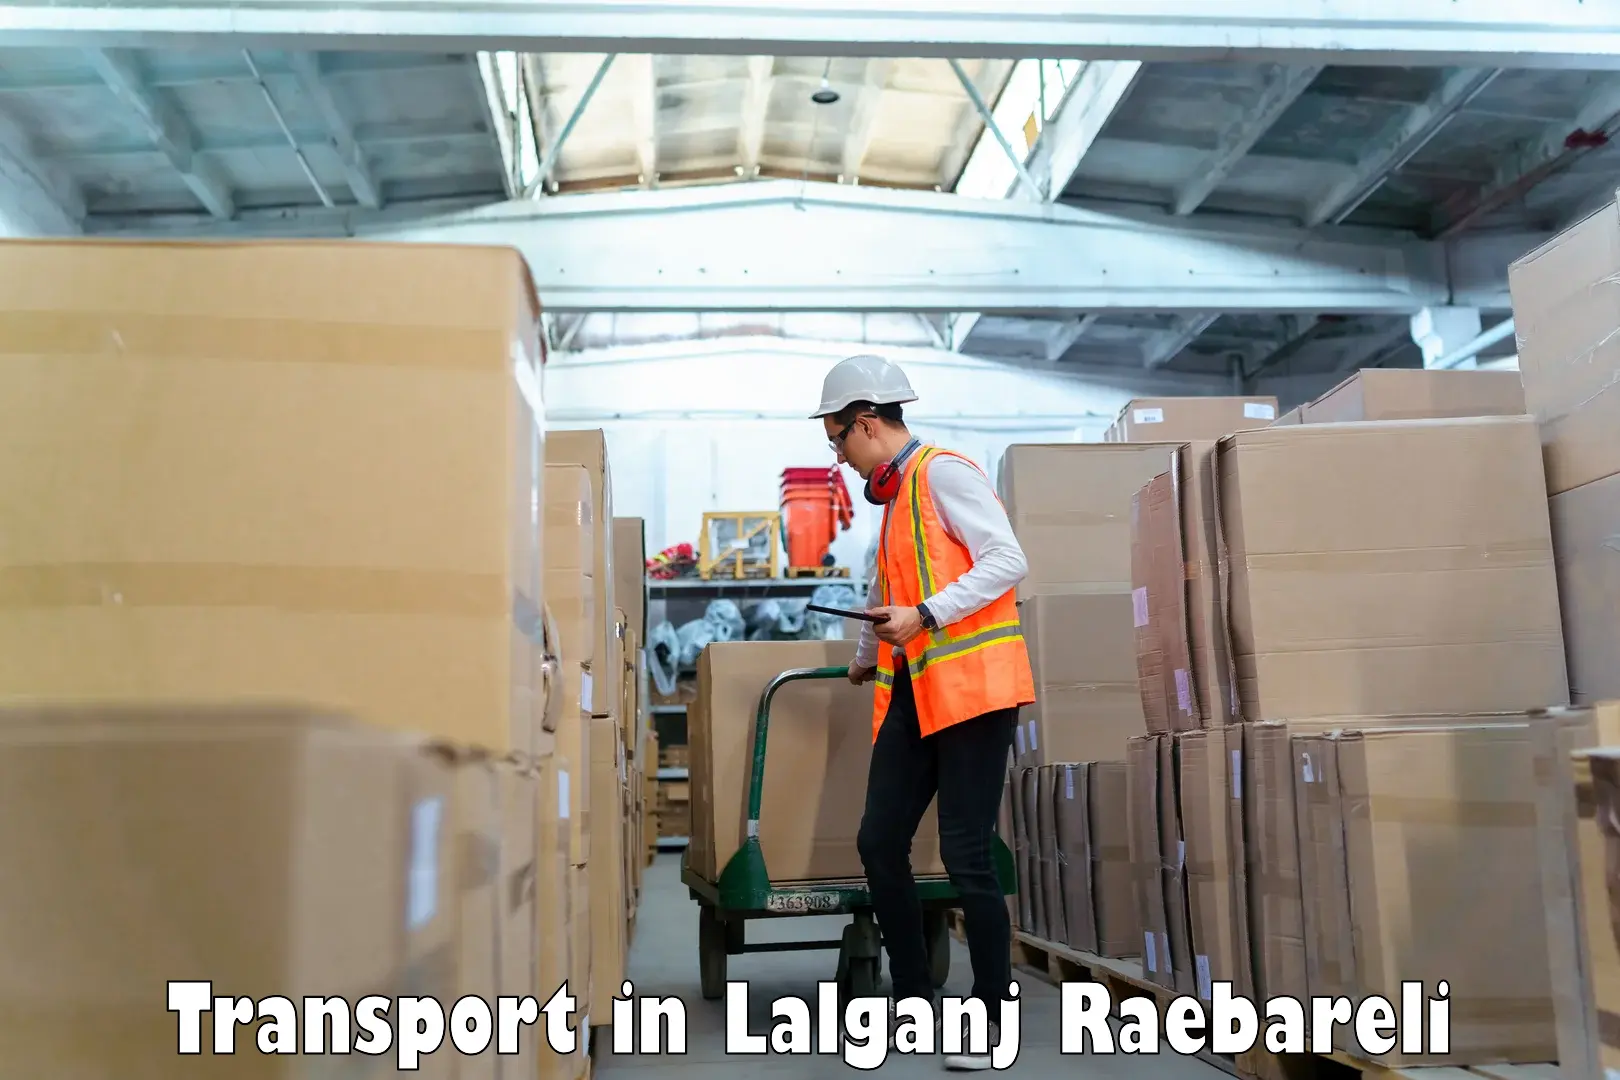 Cargo transport services in Lalganj Raebareli